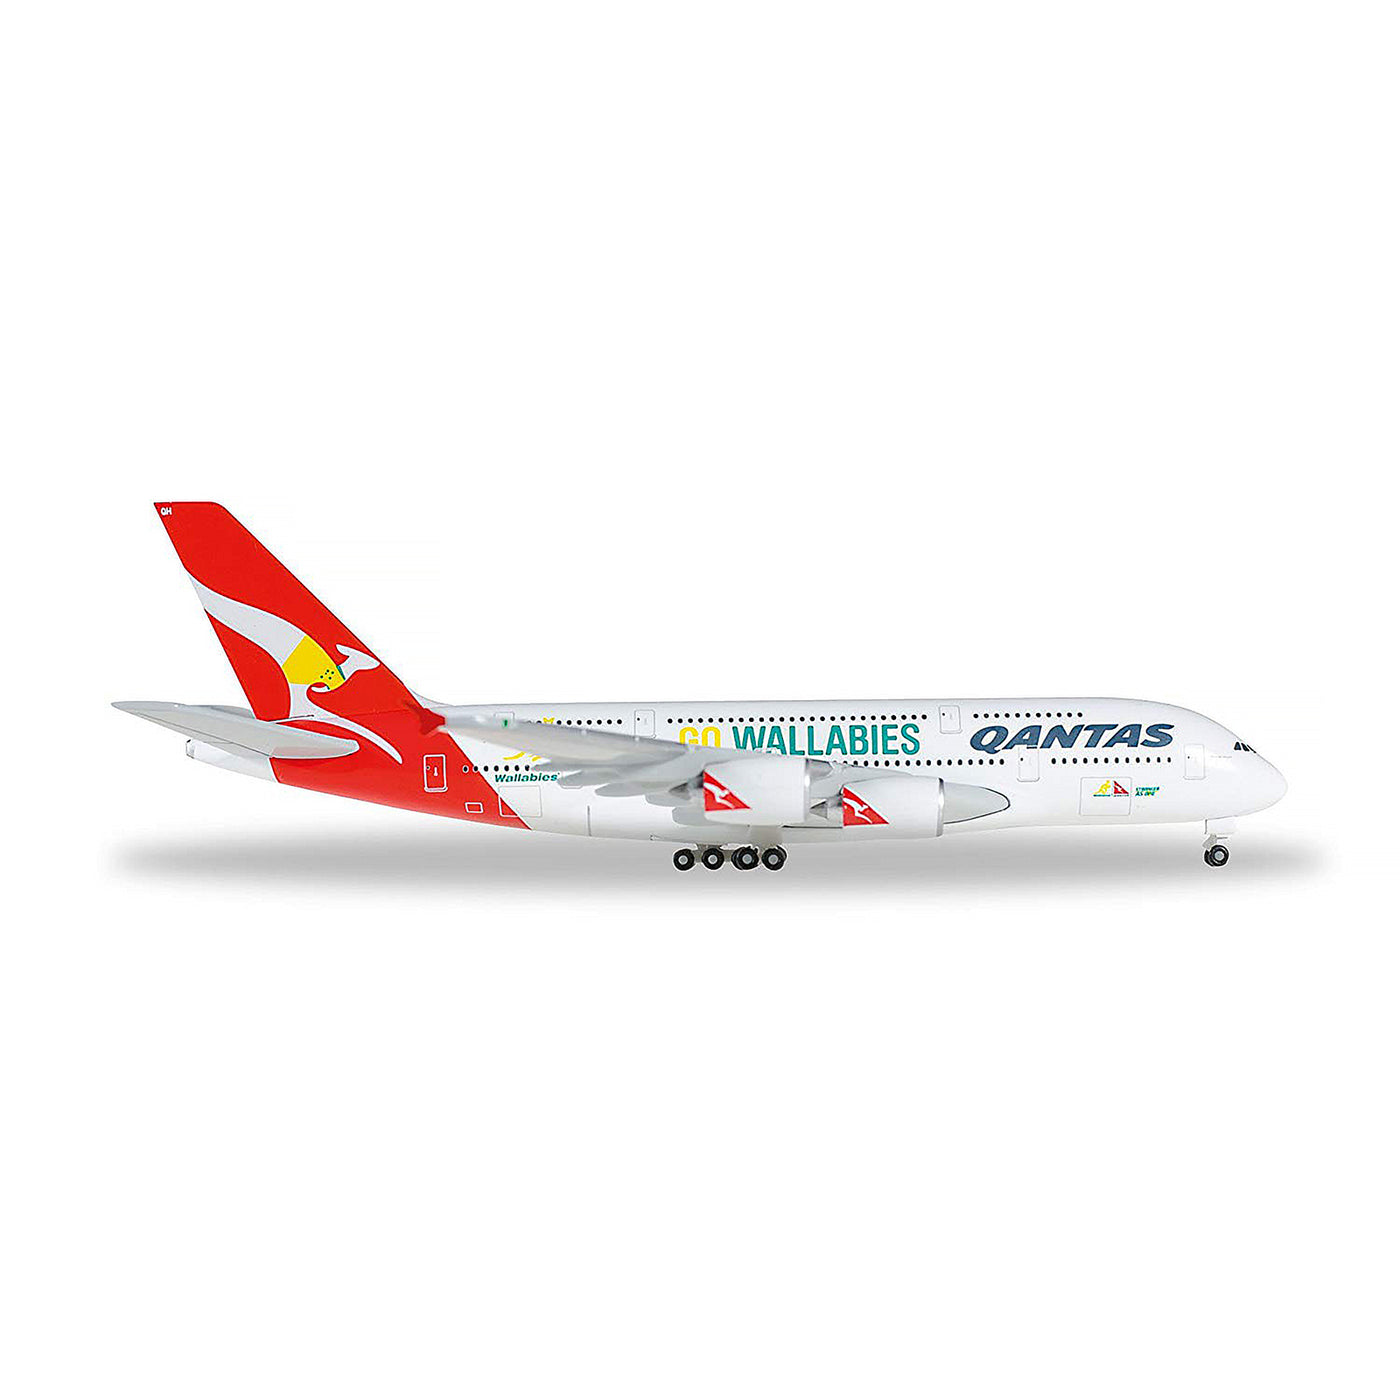 Herpa - Herpa 1/500 A380 Qantas   'Wallabies'